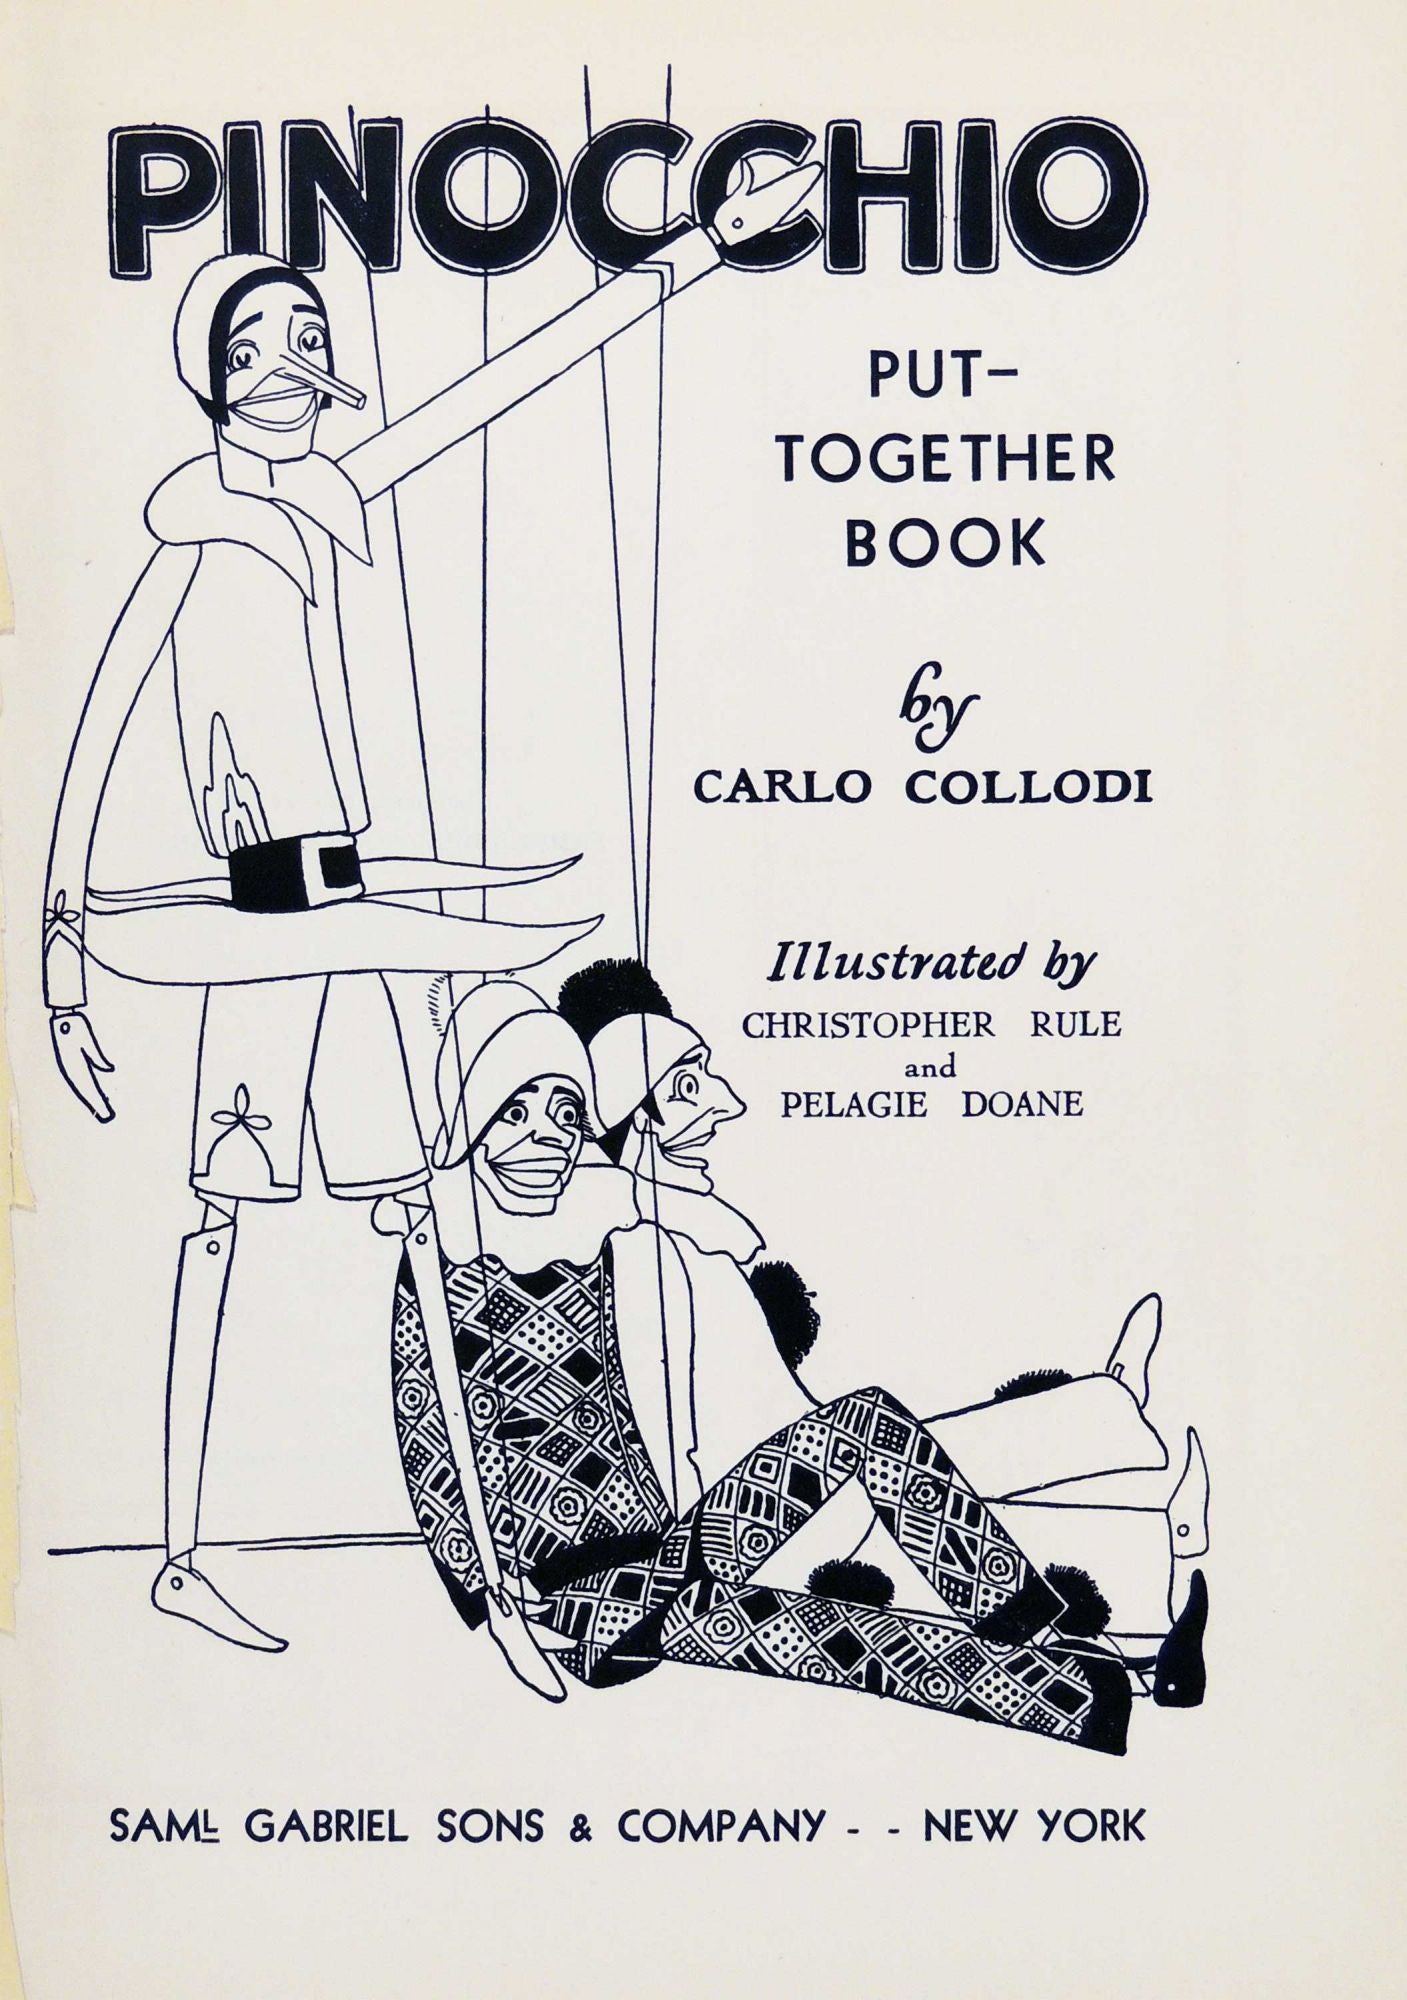 Pinocchio put-together book  Carlo Collodi, Christopher Rule, Pelagie Doane